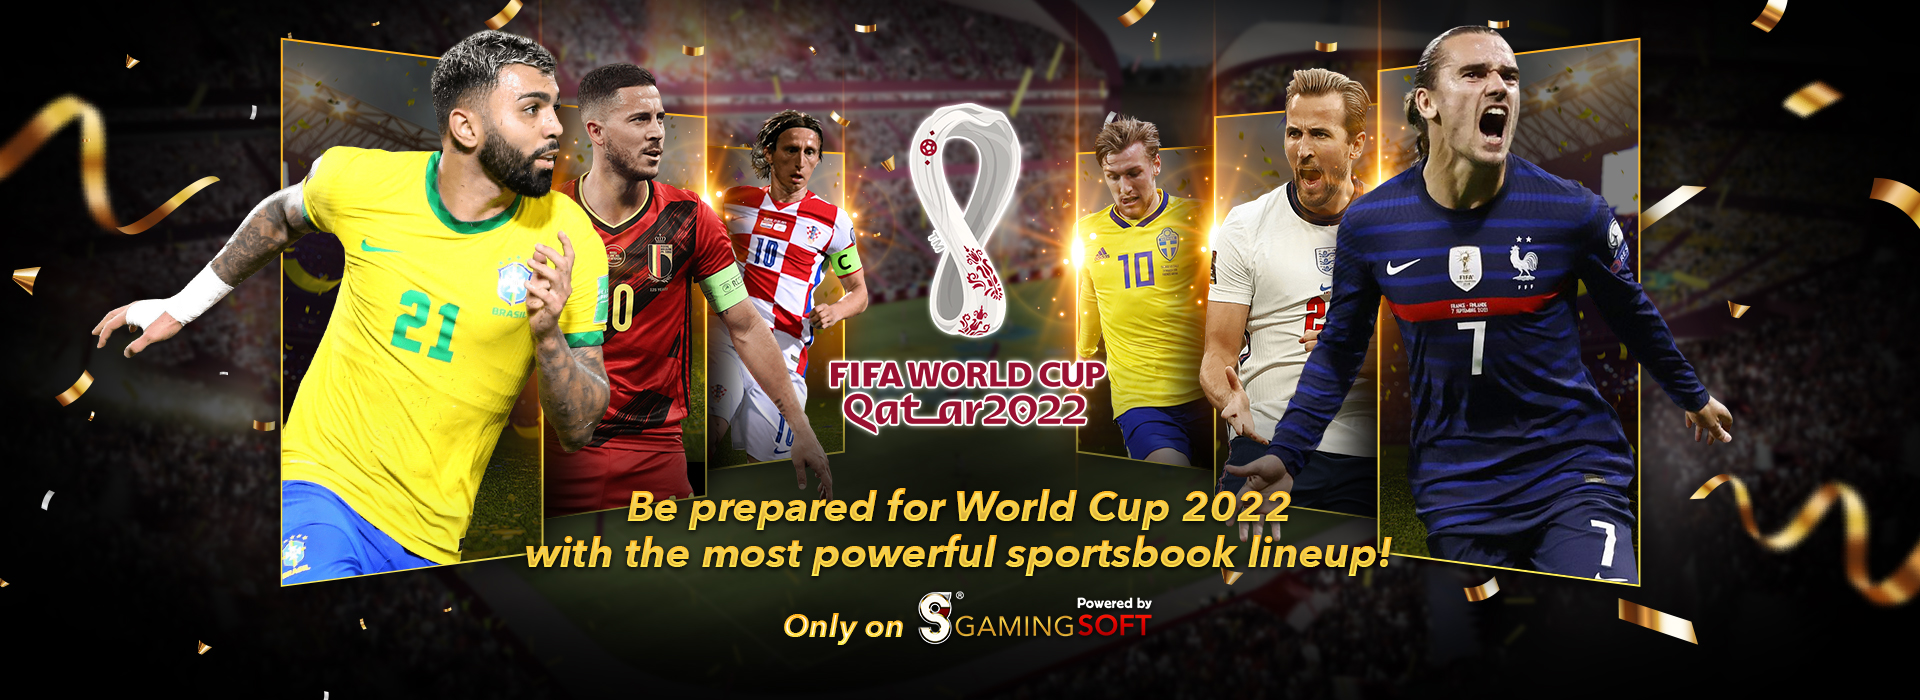 World Cup 2022 Web Banner - GamingSoft